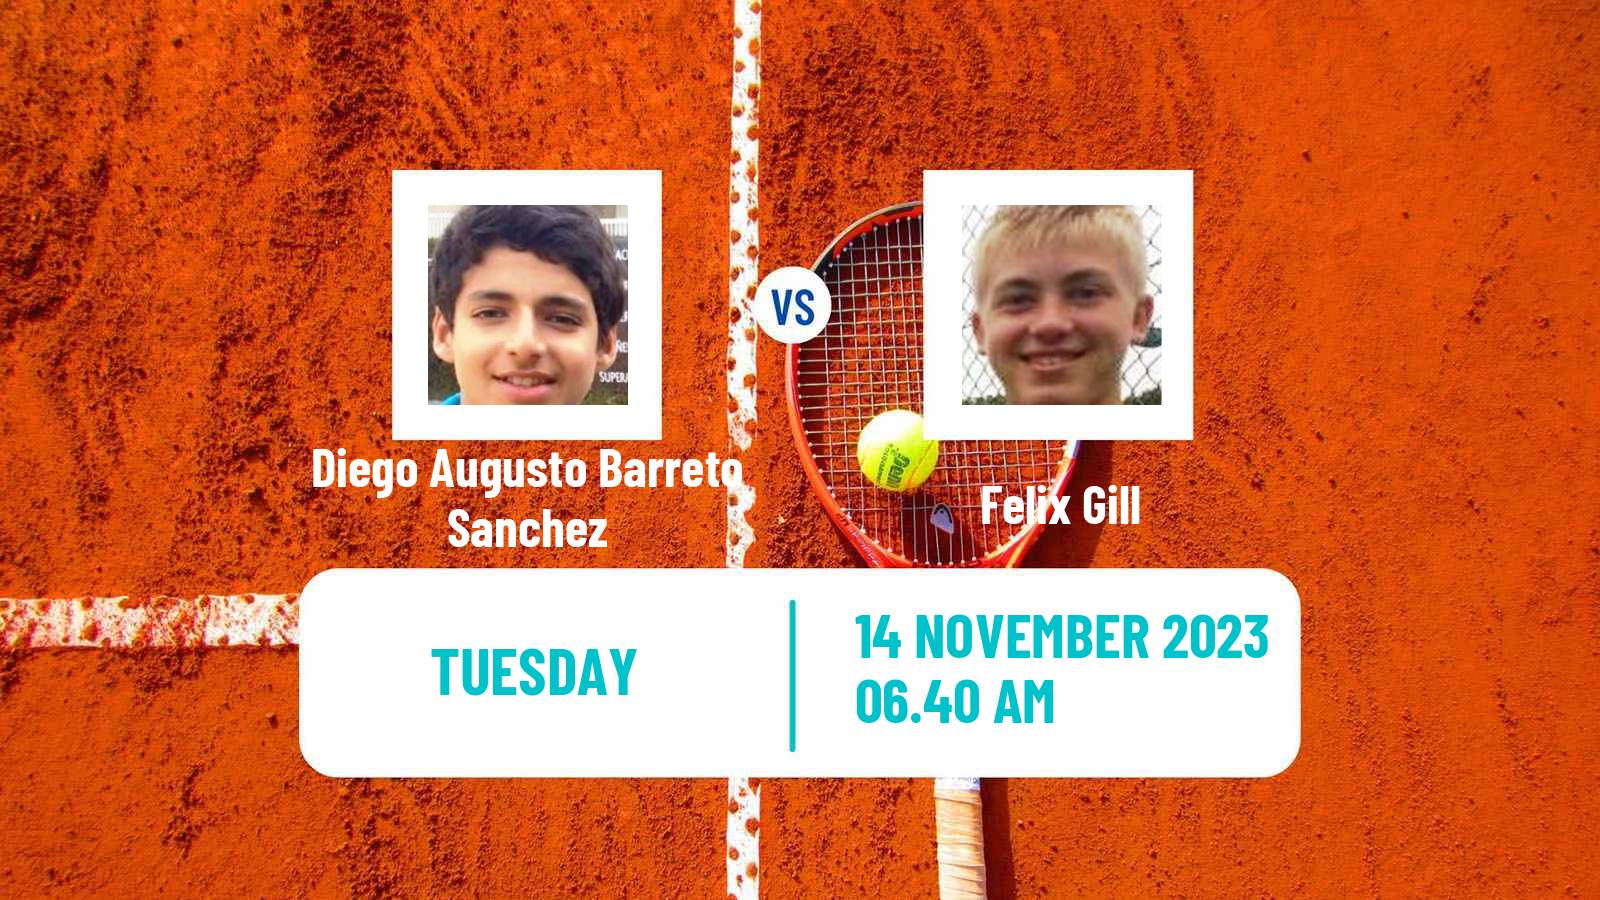 Tennis ITF M15 Valencia Men Diego Augusto Barreto Sanchez - Felix Gill